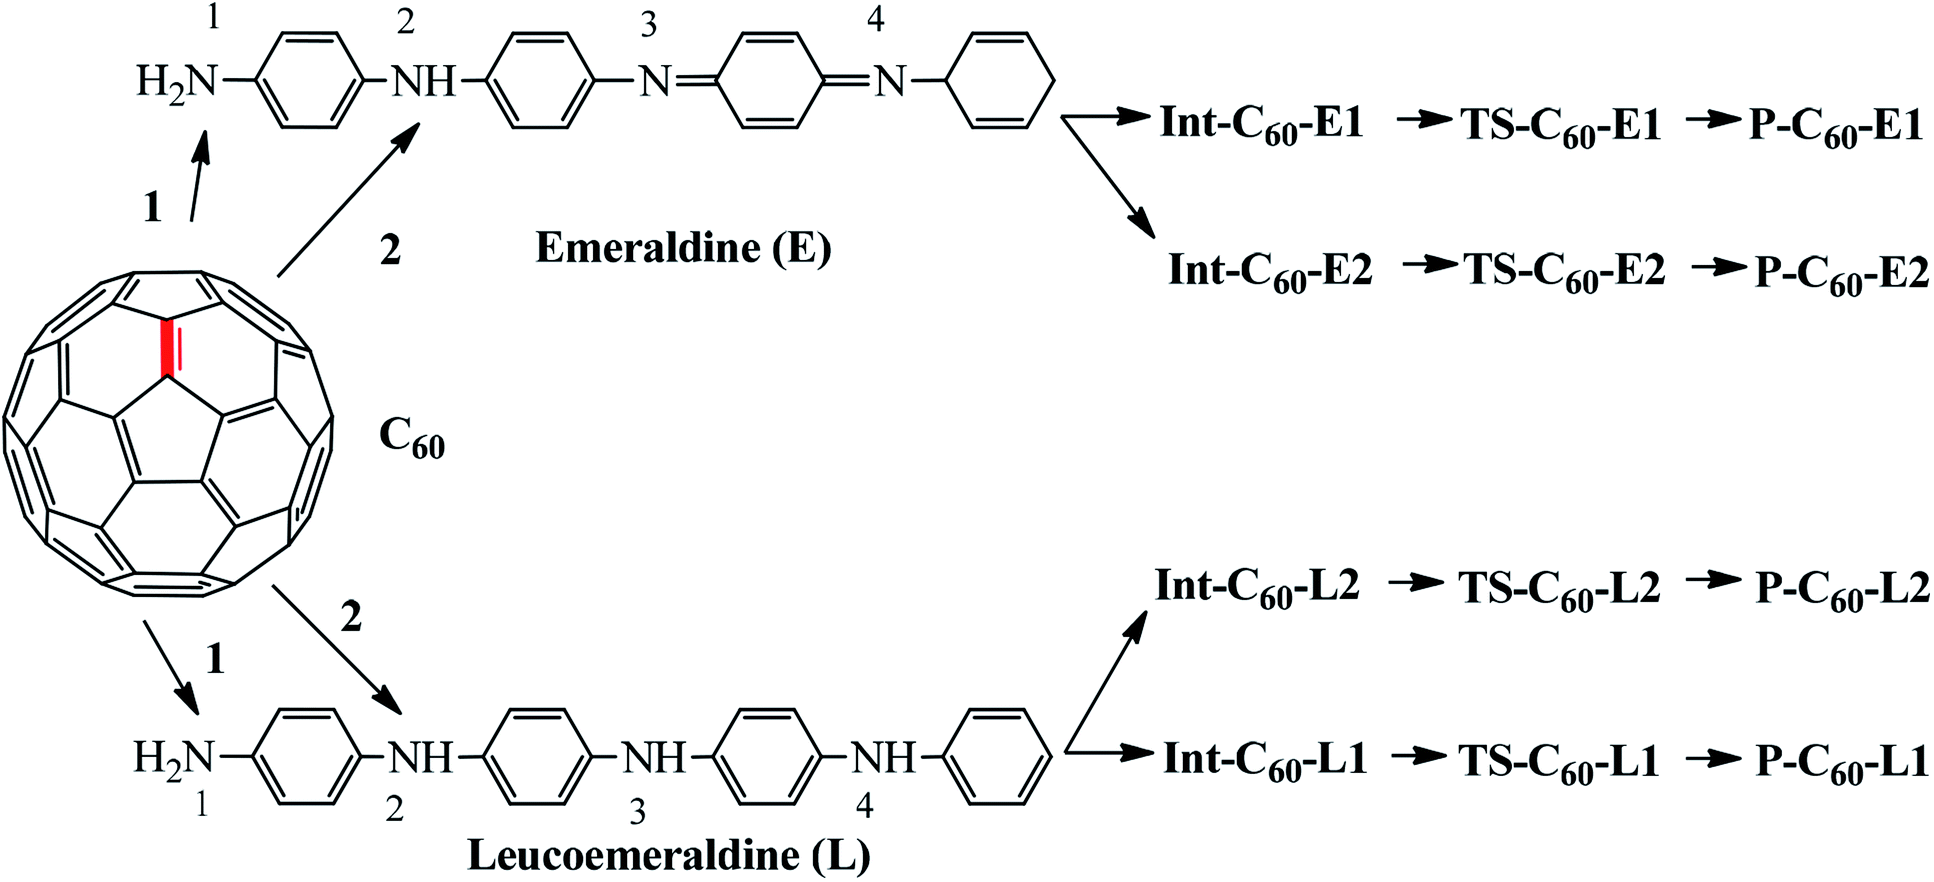 Functionalization And Antioxidant Activity Of Polyaniline Fullerene Hybrid Nanomaterials A Theoretical Investigation Rsc Advances Rsc Publishing Doi 10 1039 D0rab